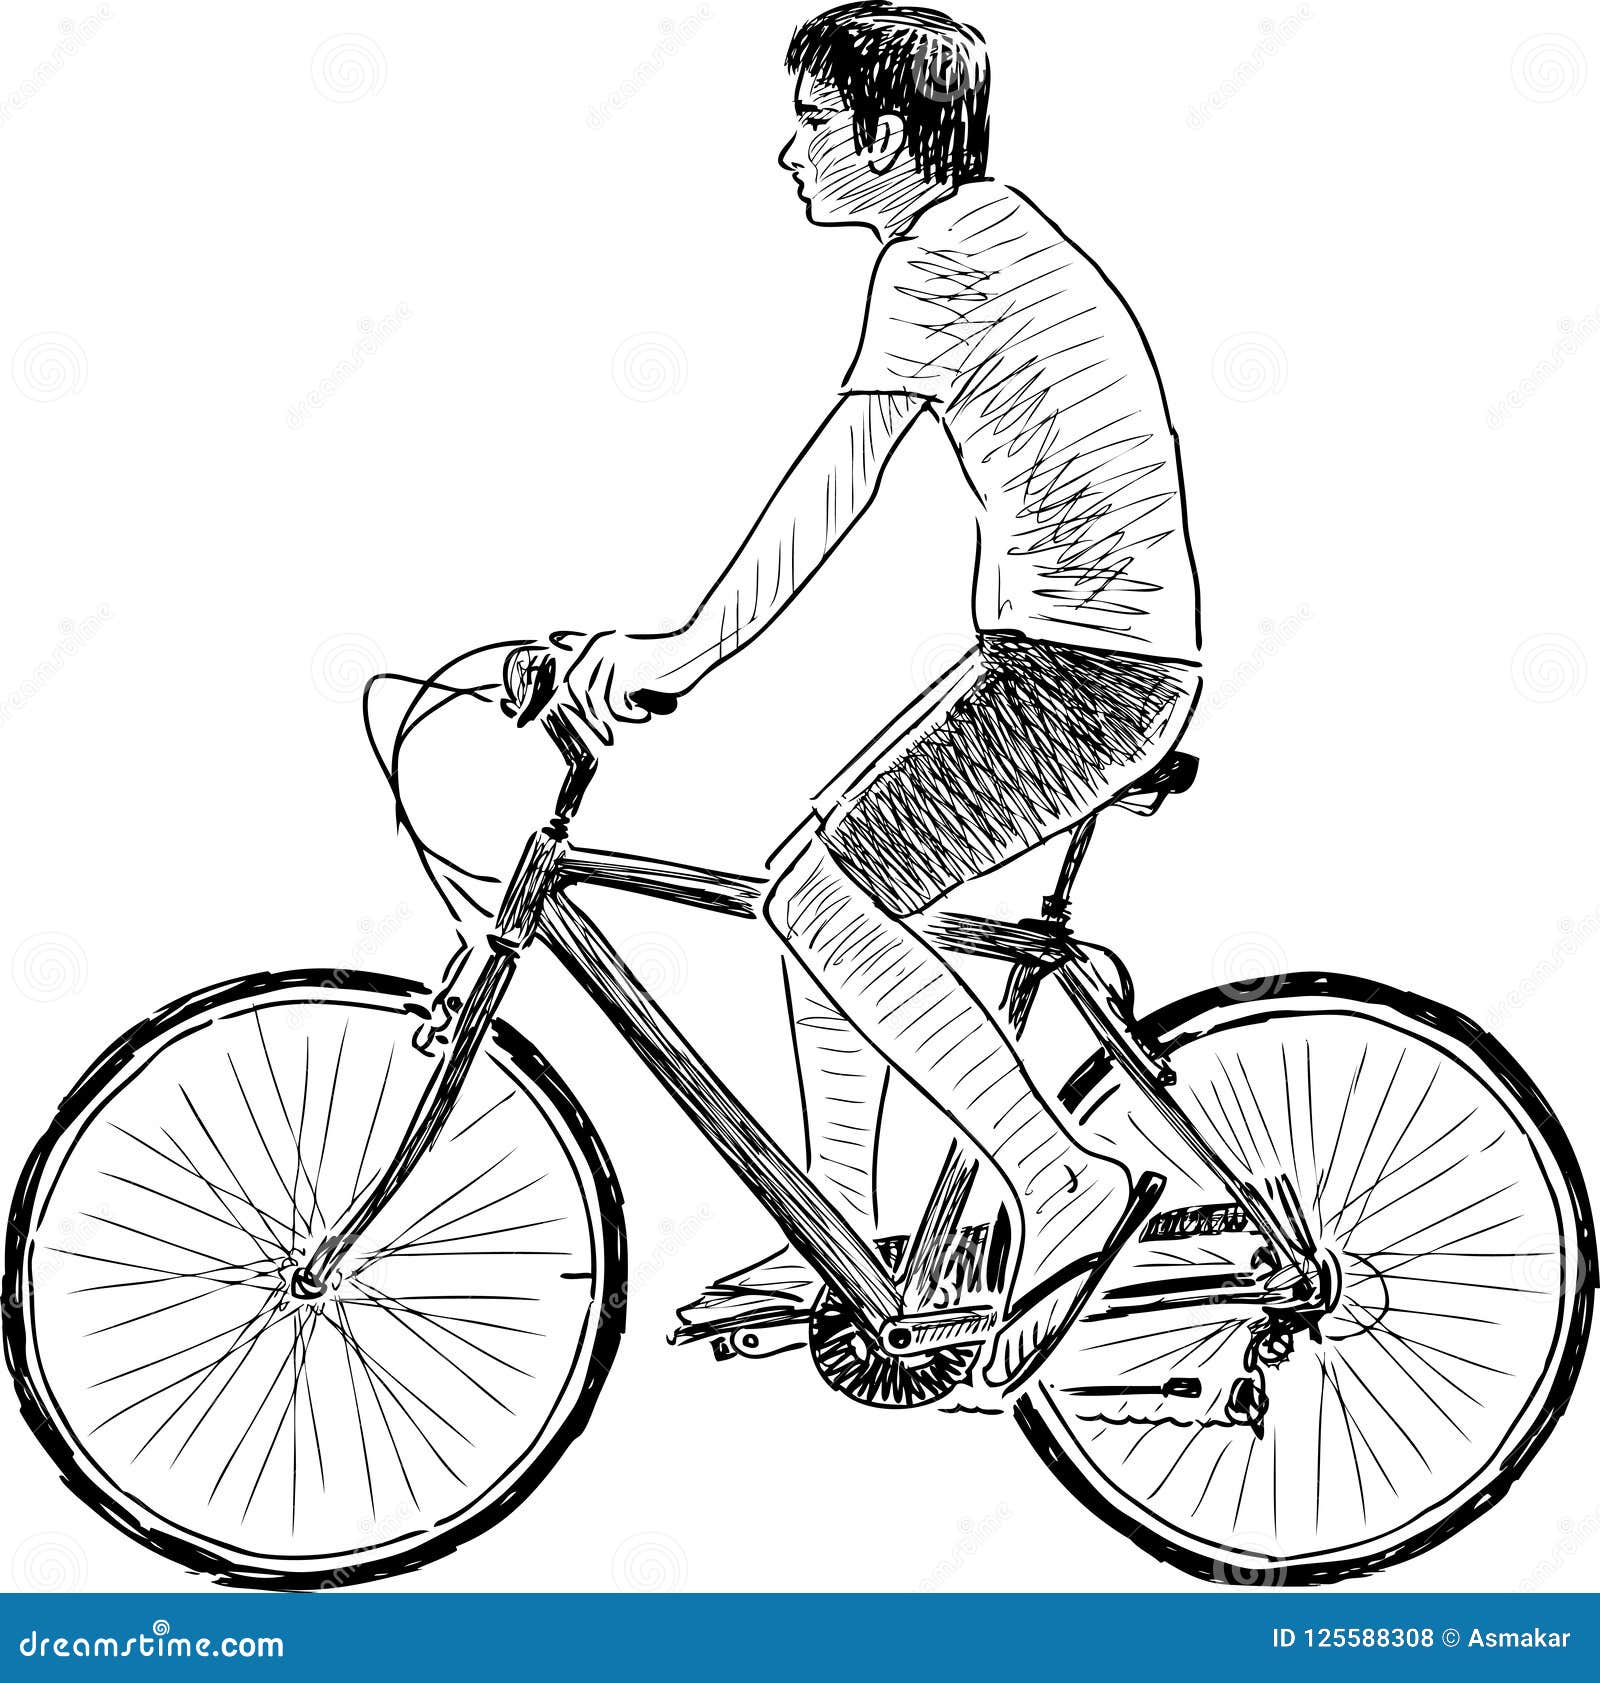 bicycle sketches  Bicycle sketch Bicycle art recycled Bike sketch